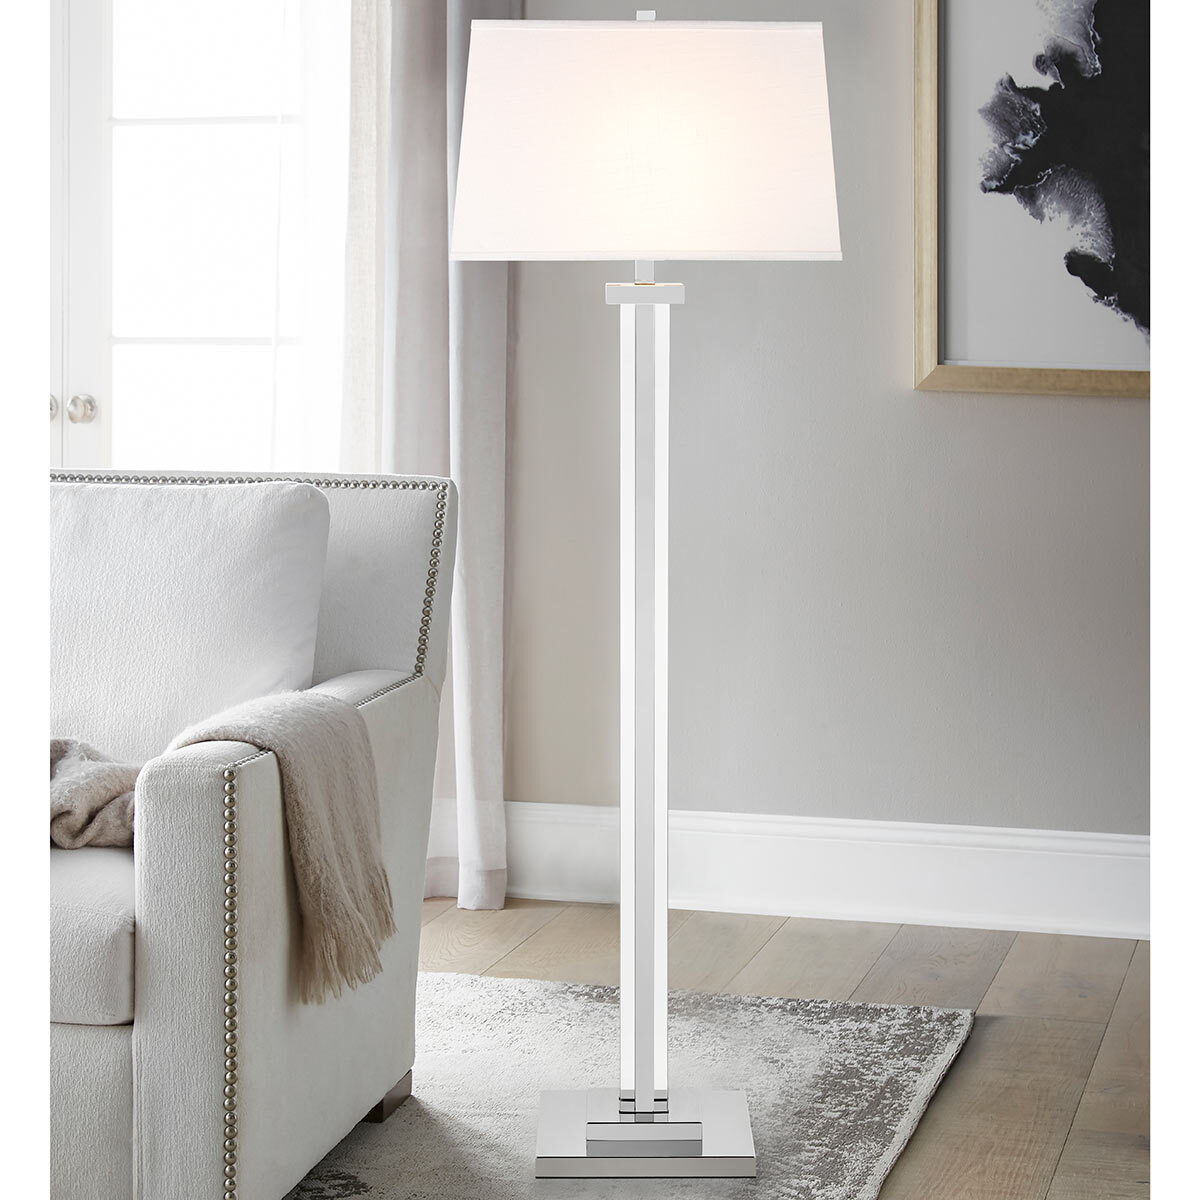 Lifestyle Image of Kate Floor Lamp in room